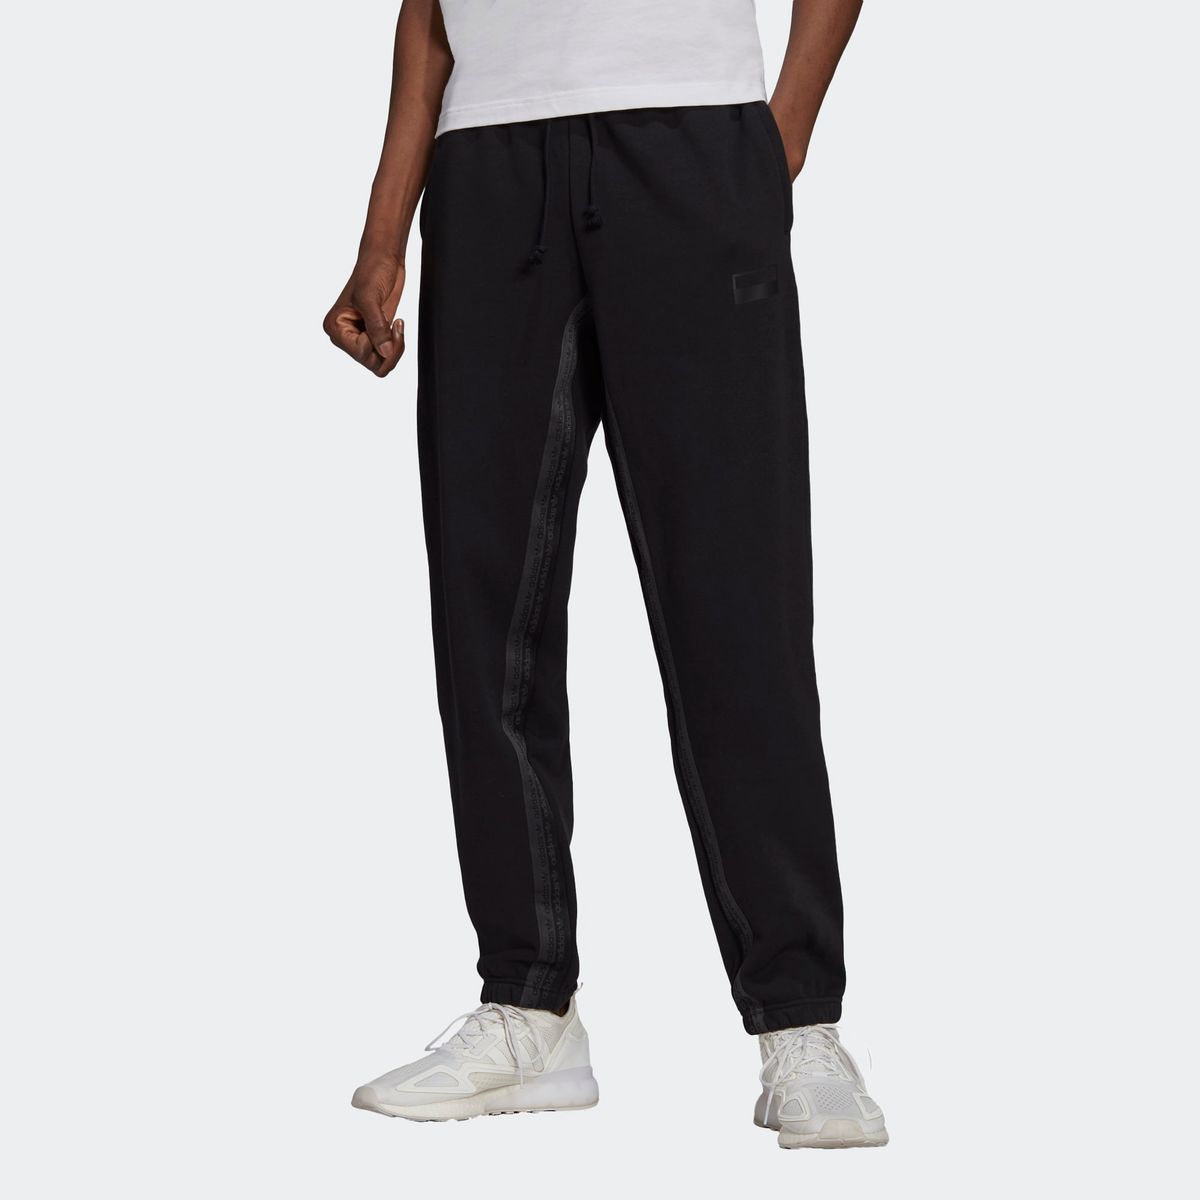 H11486 - Pantaloni - Adidas